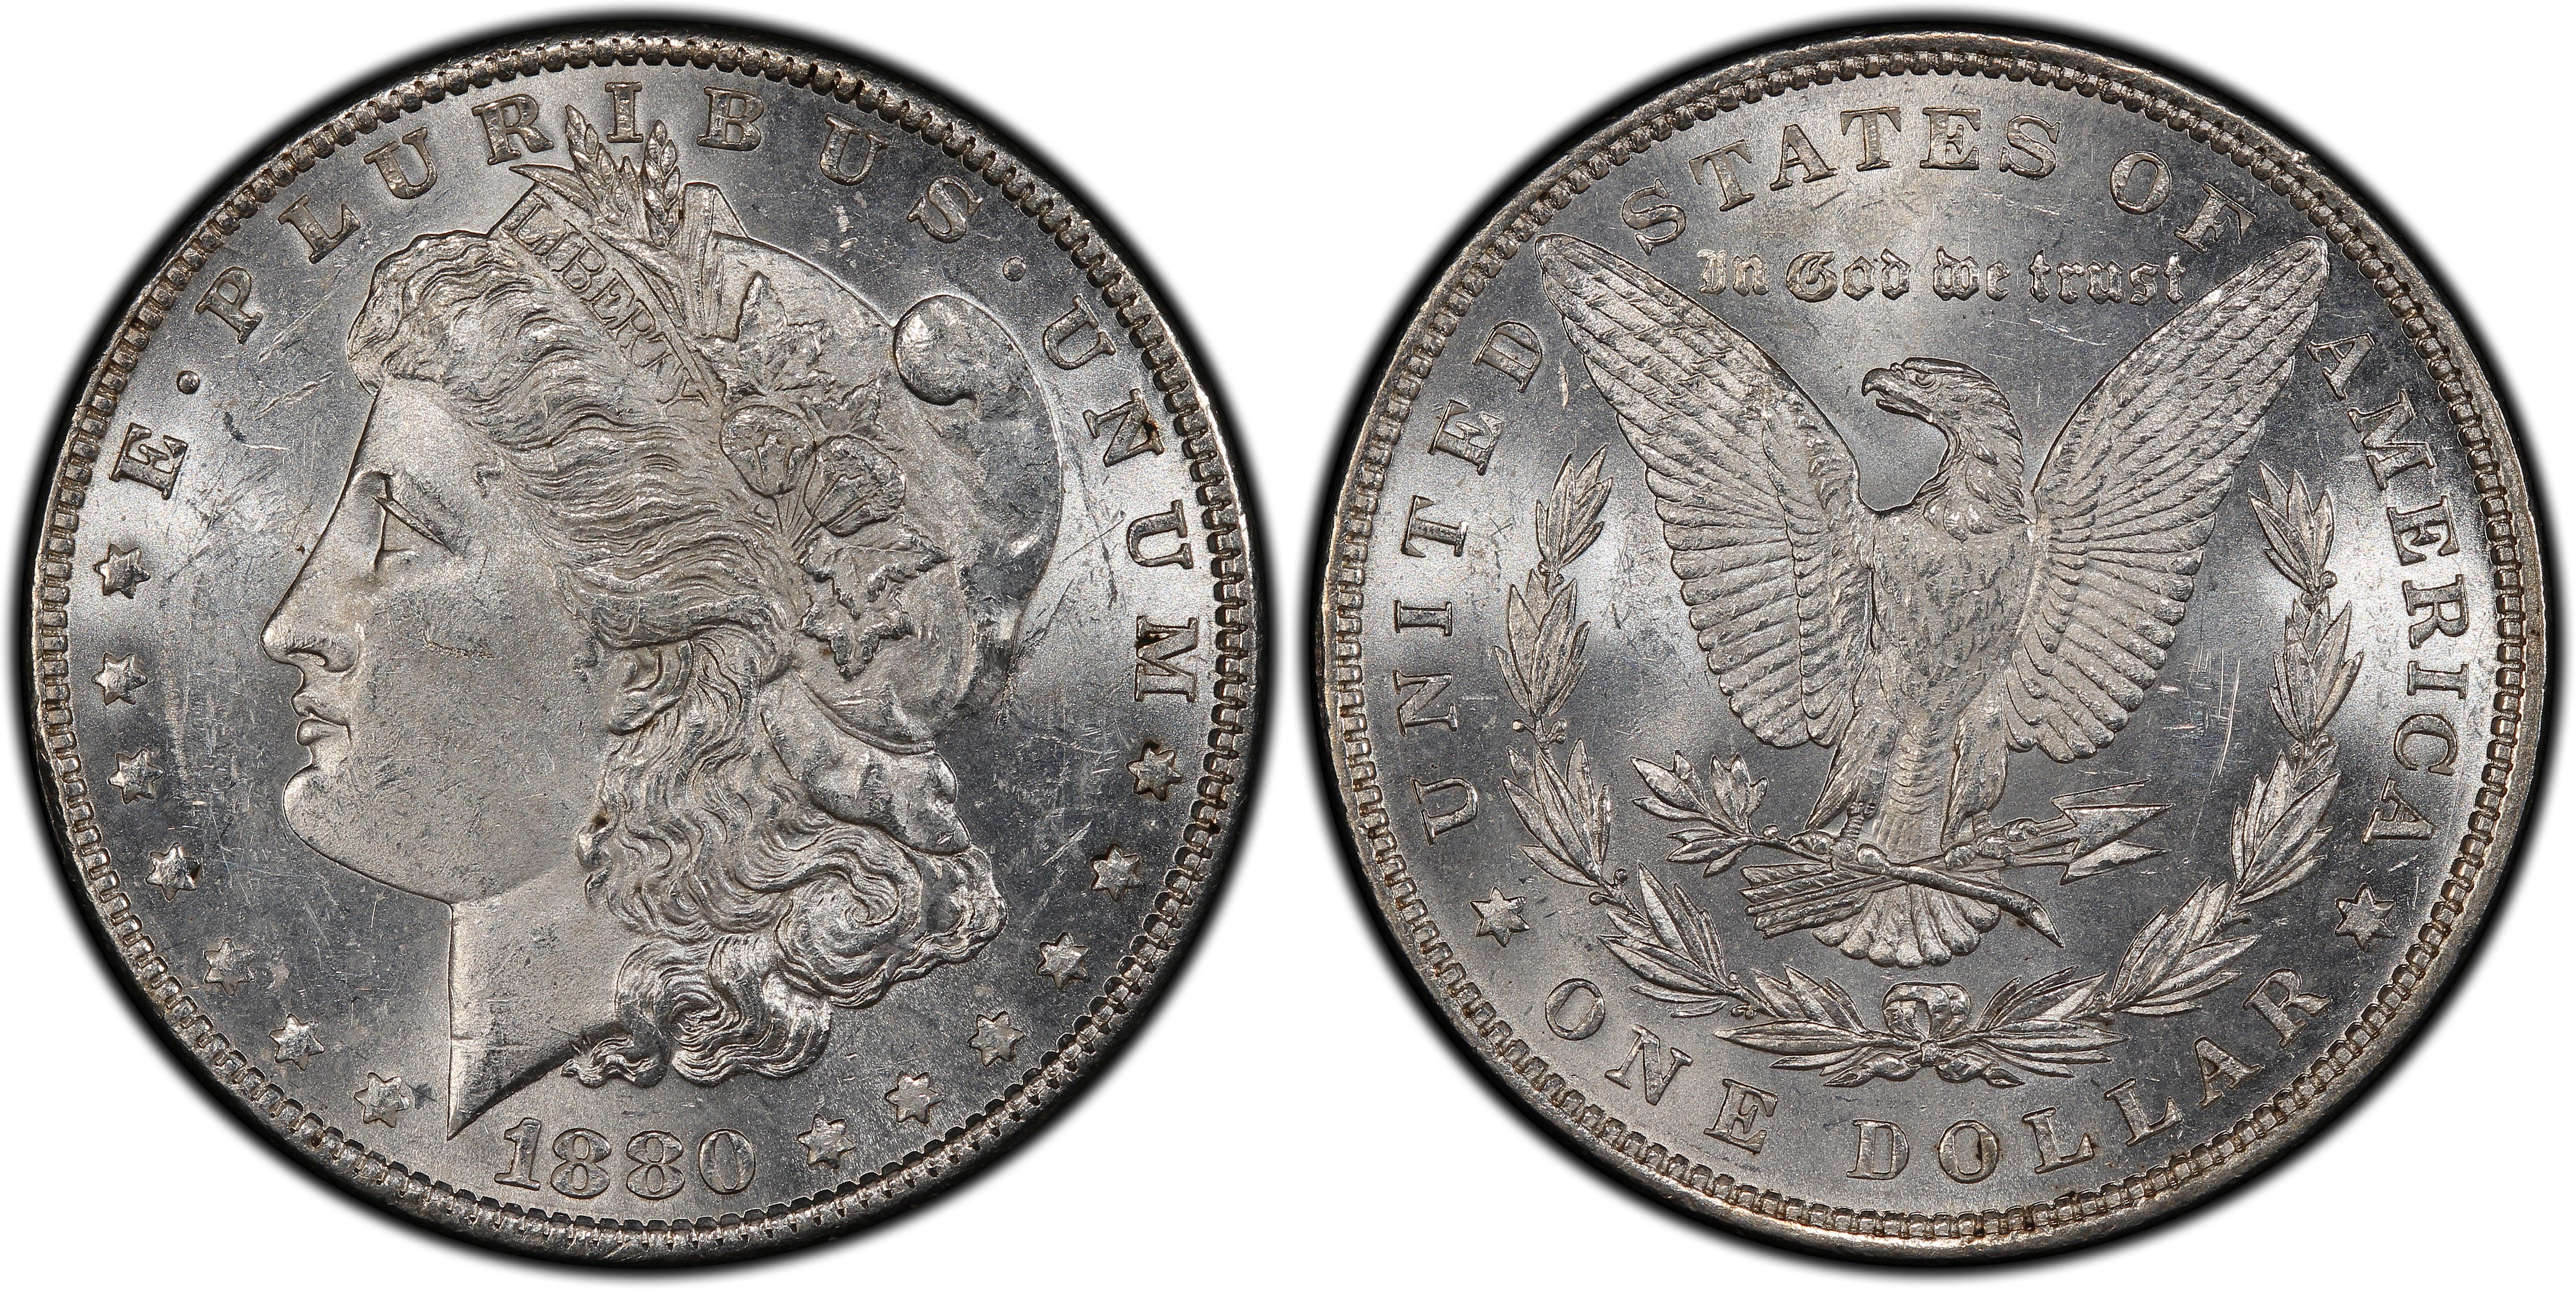 1880 $1 VAM 8 8/7 Ears (Regular Strike) Morgan Dollar - PCGS CoinFacts